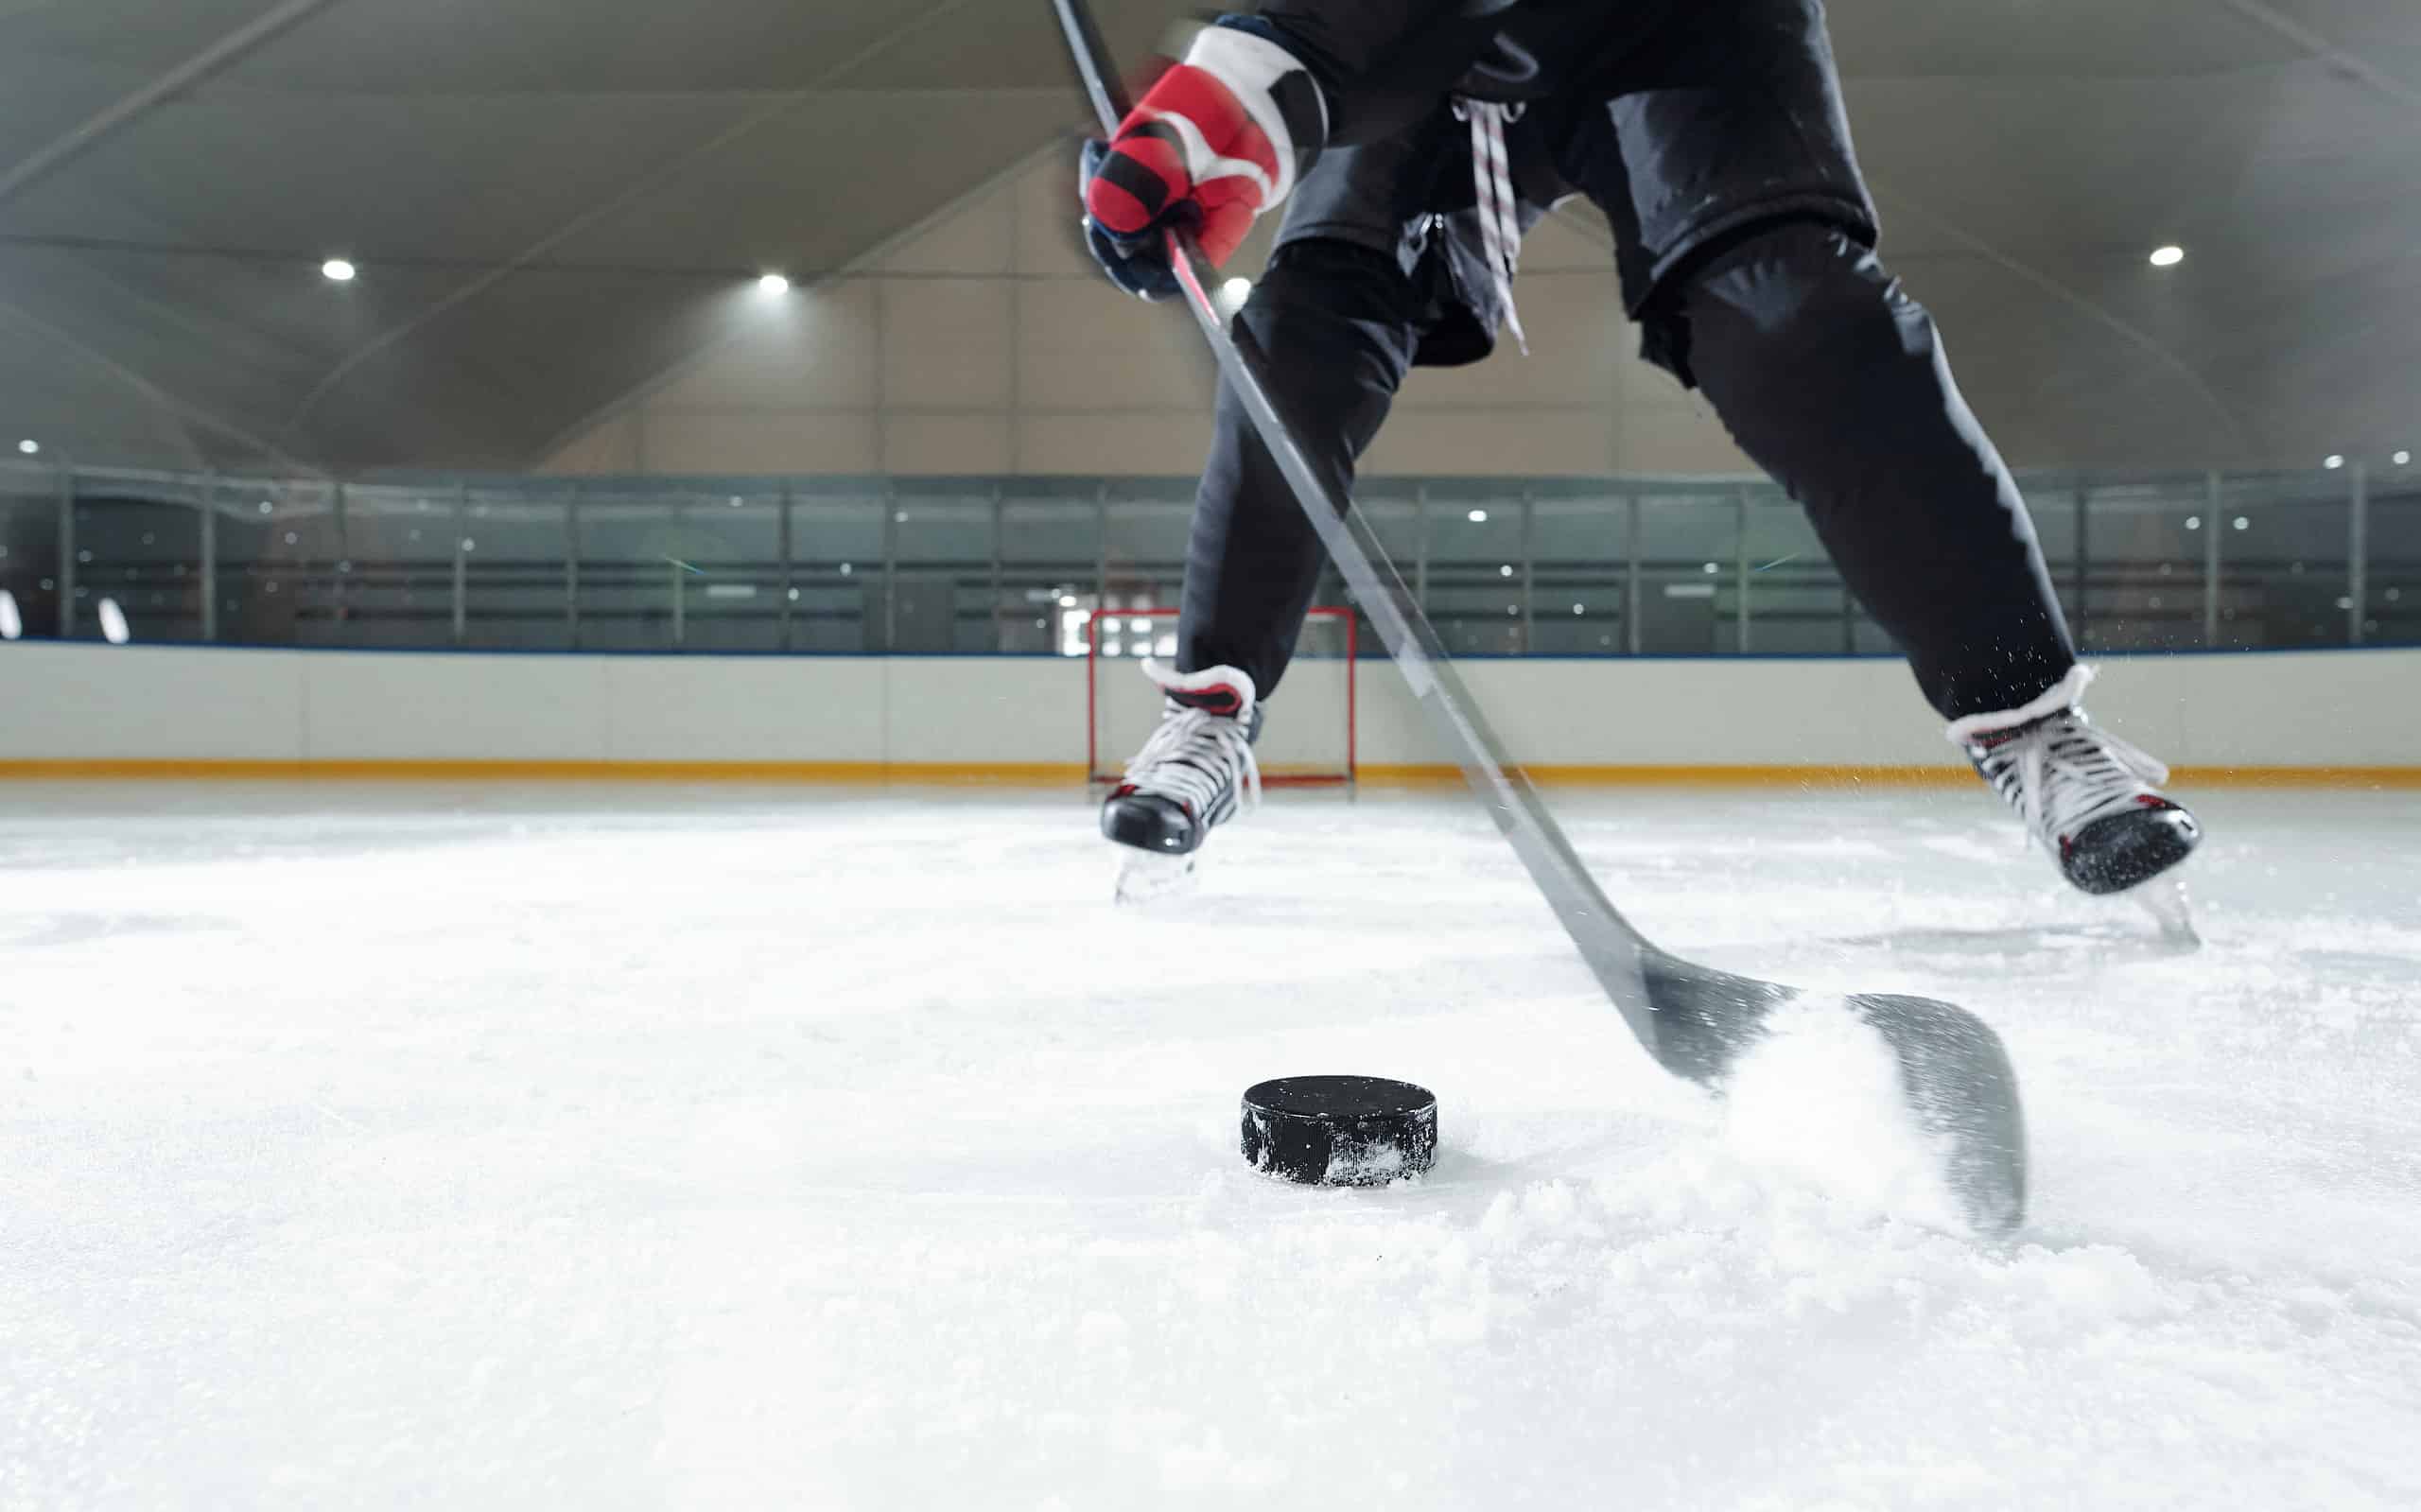 Hockey Player, Hockey Puck, Ice, Ice Rink, Indoors